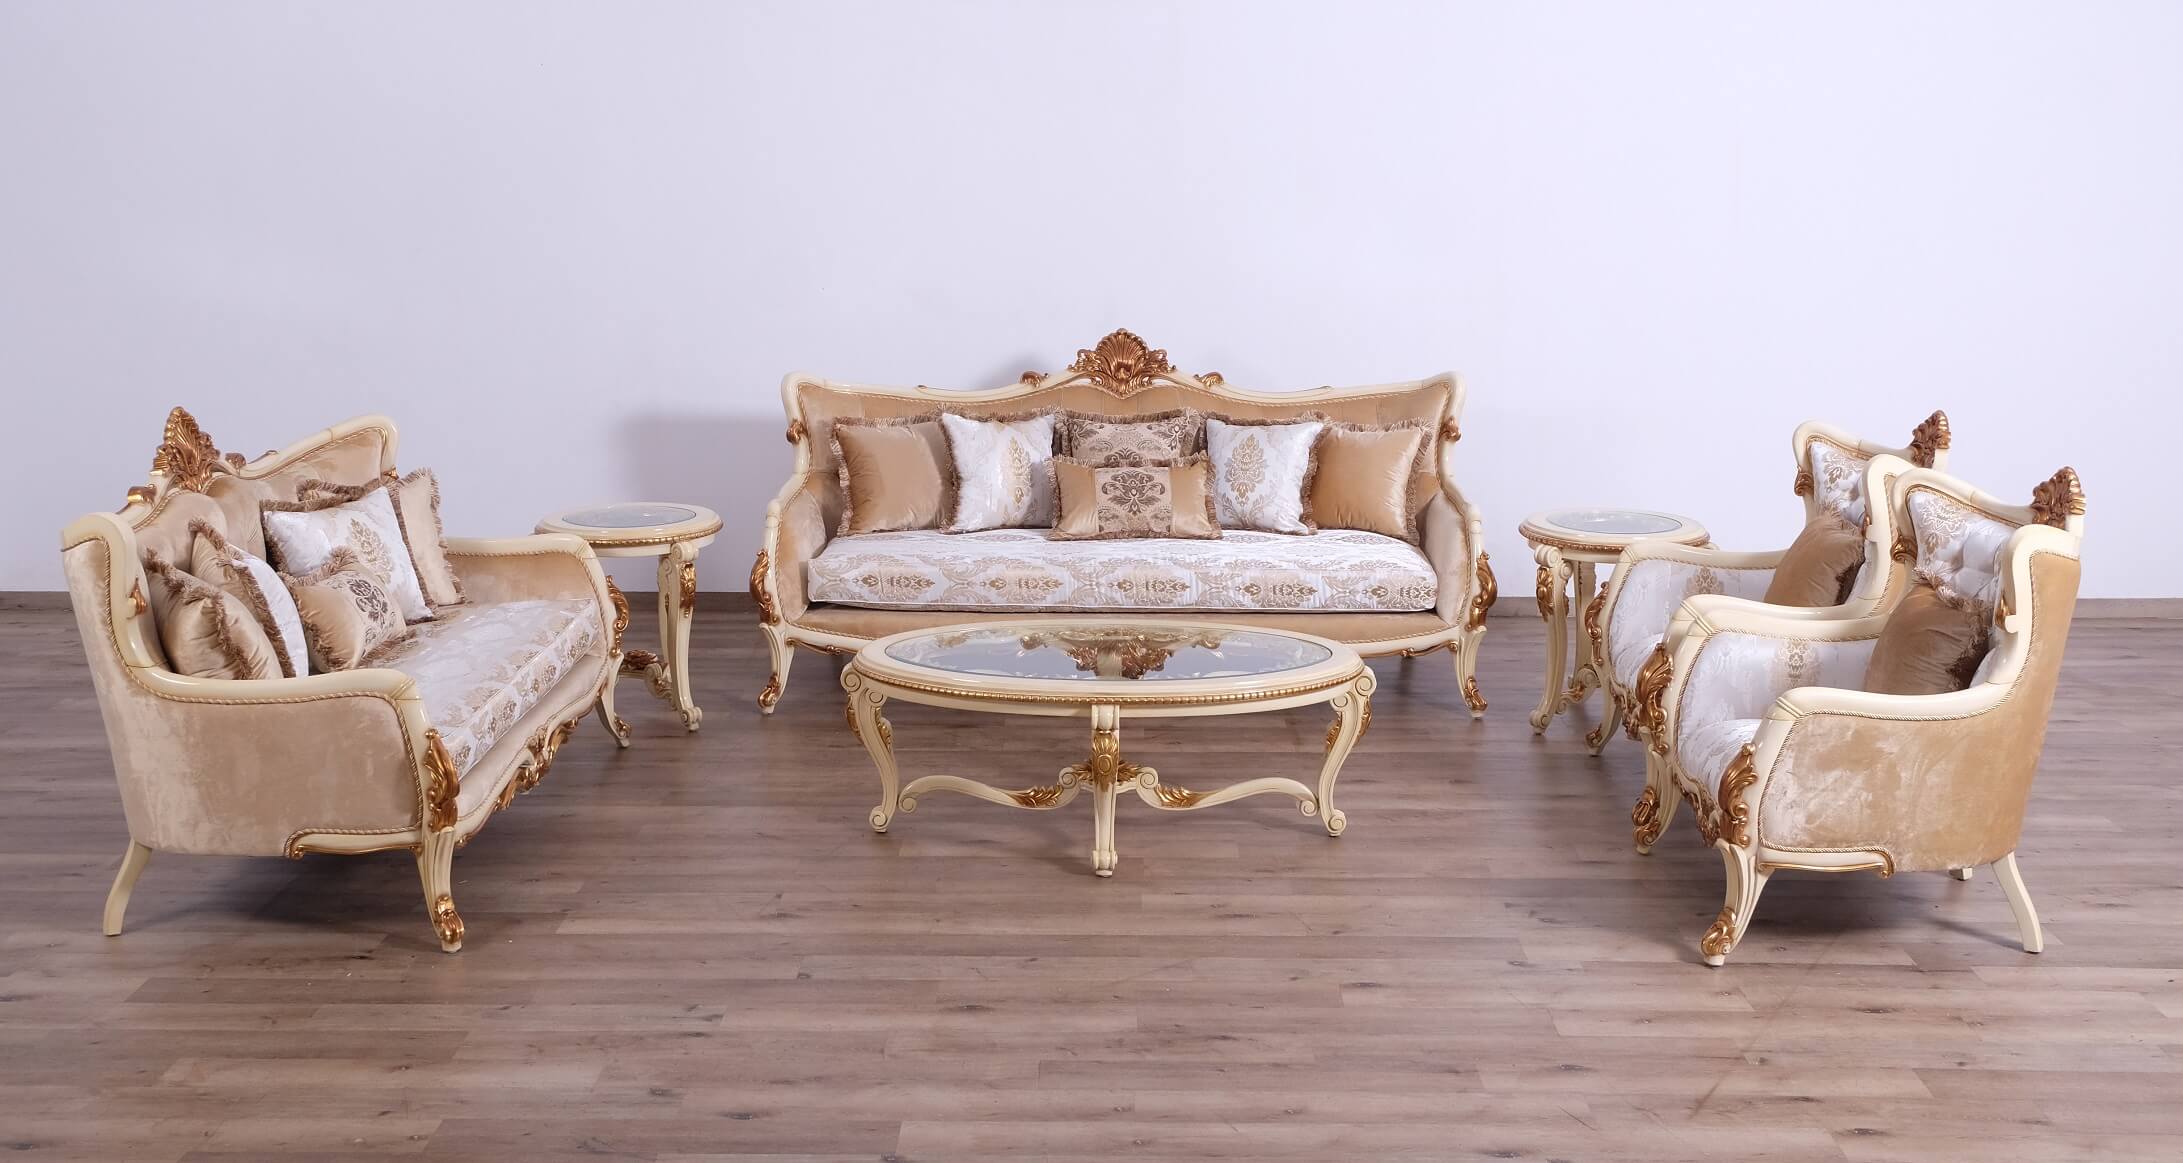 luxury elegant living room furniture